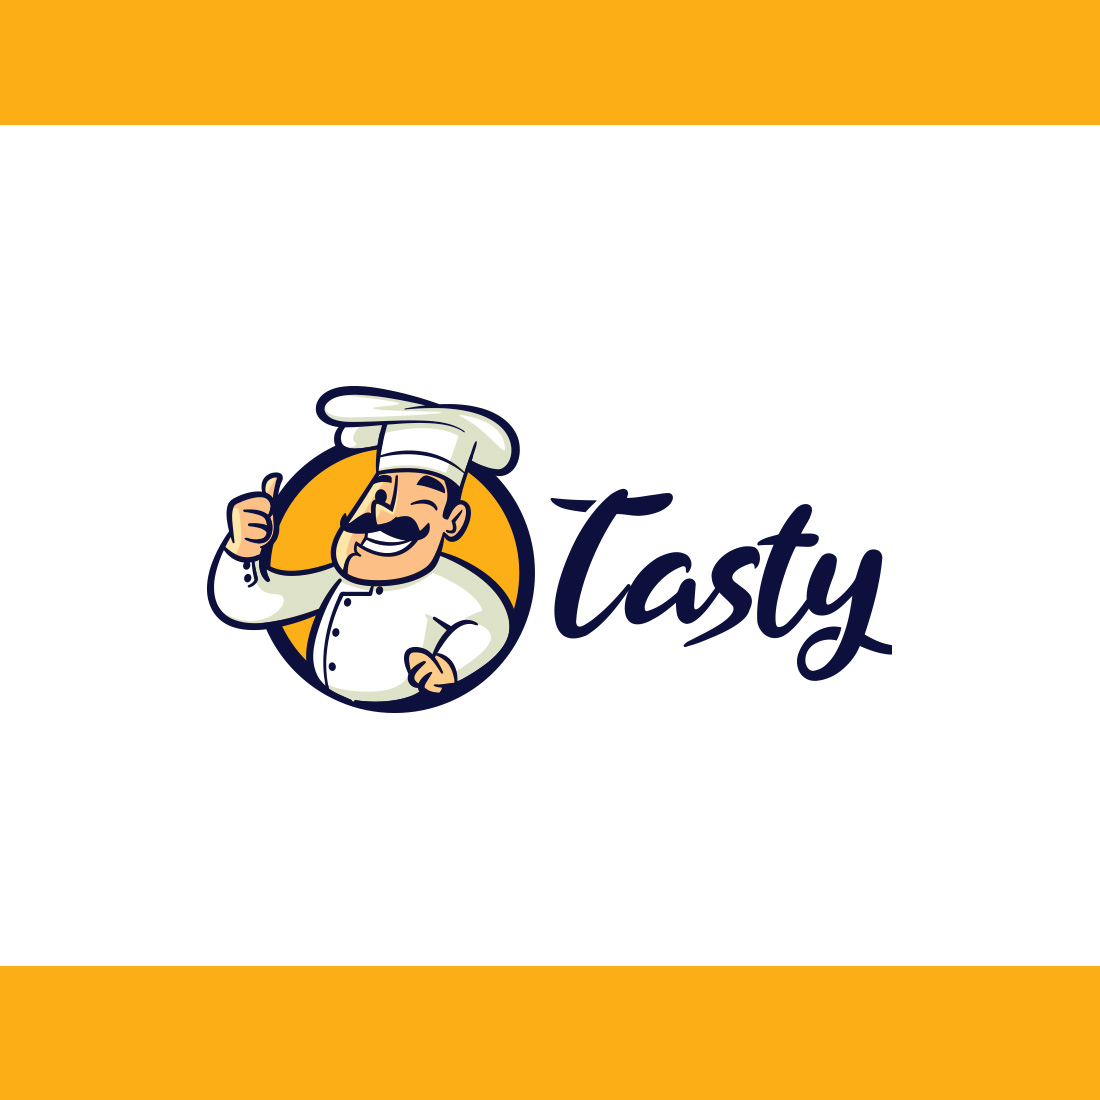 Retro Vintage Chef Cartoon Mascot Logo cover image.